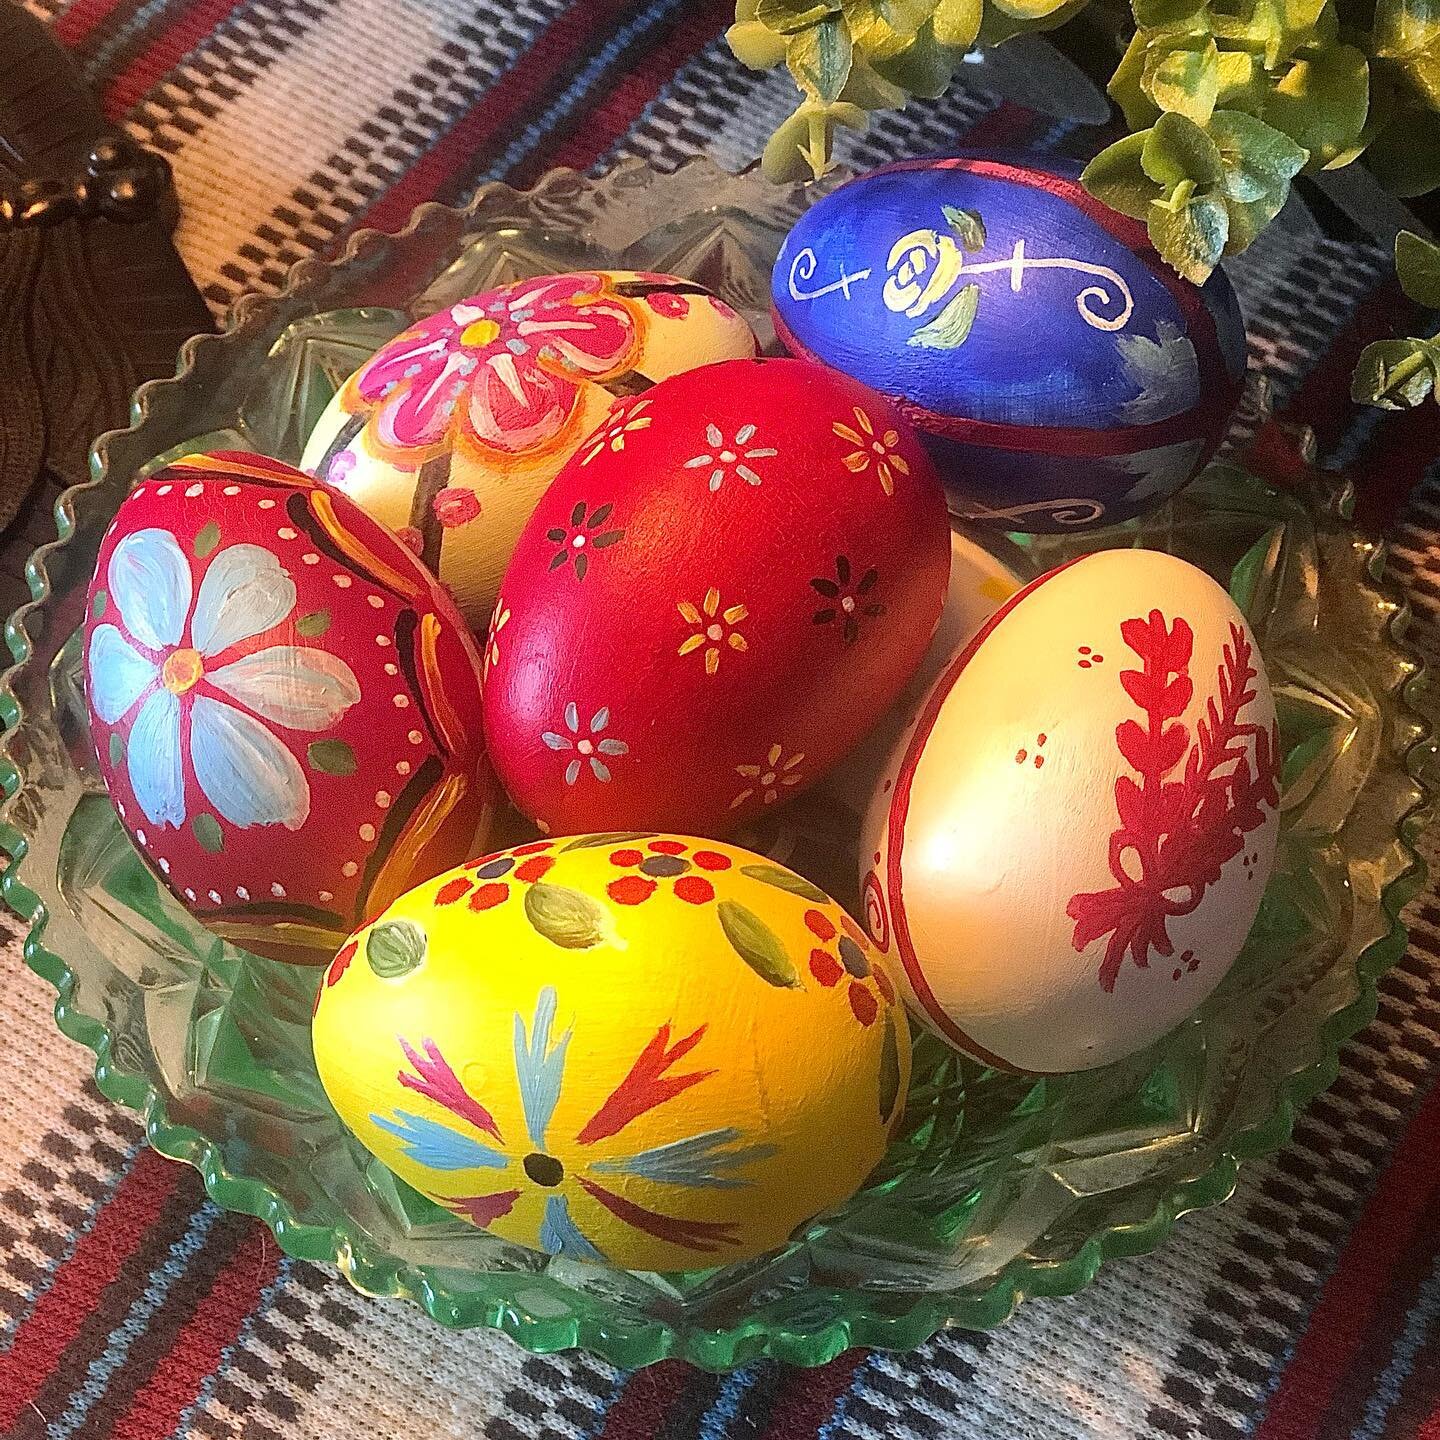 Wooden painted eggs for a friend. It was a difficult, but fun surface to paint on. 
.
.
.
#eastereggs #woodeneggs #paintedeggs #paintedwoodeneggs #anxietyart #milwaukeeart #milwaukeeartist #wisconsinart #wisconsinartist #artwork #abstractart #moderna